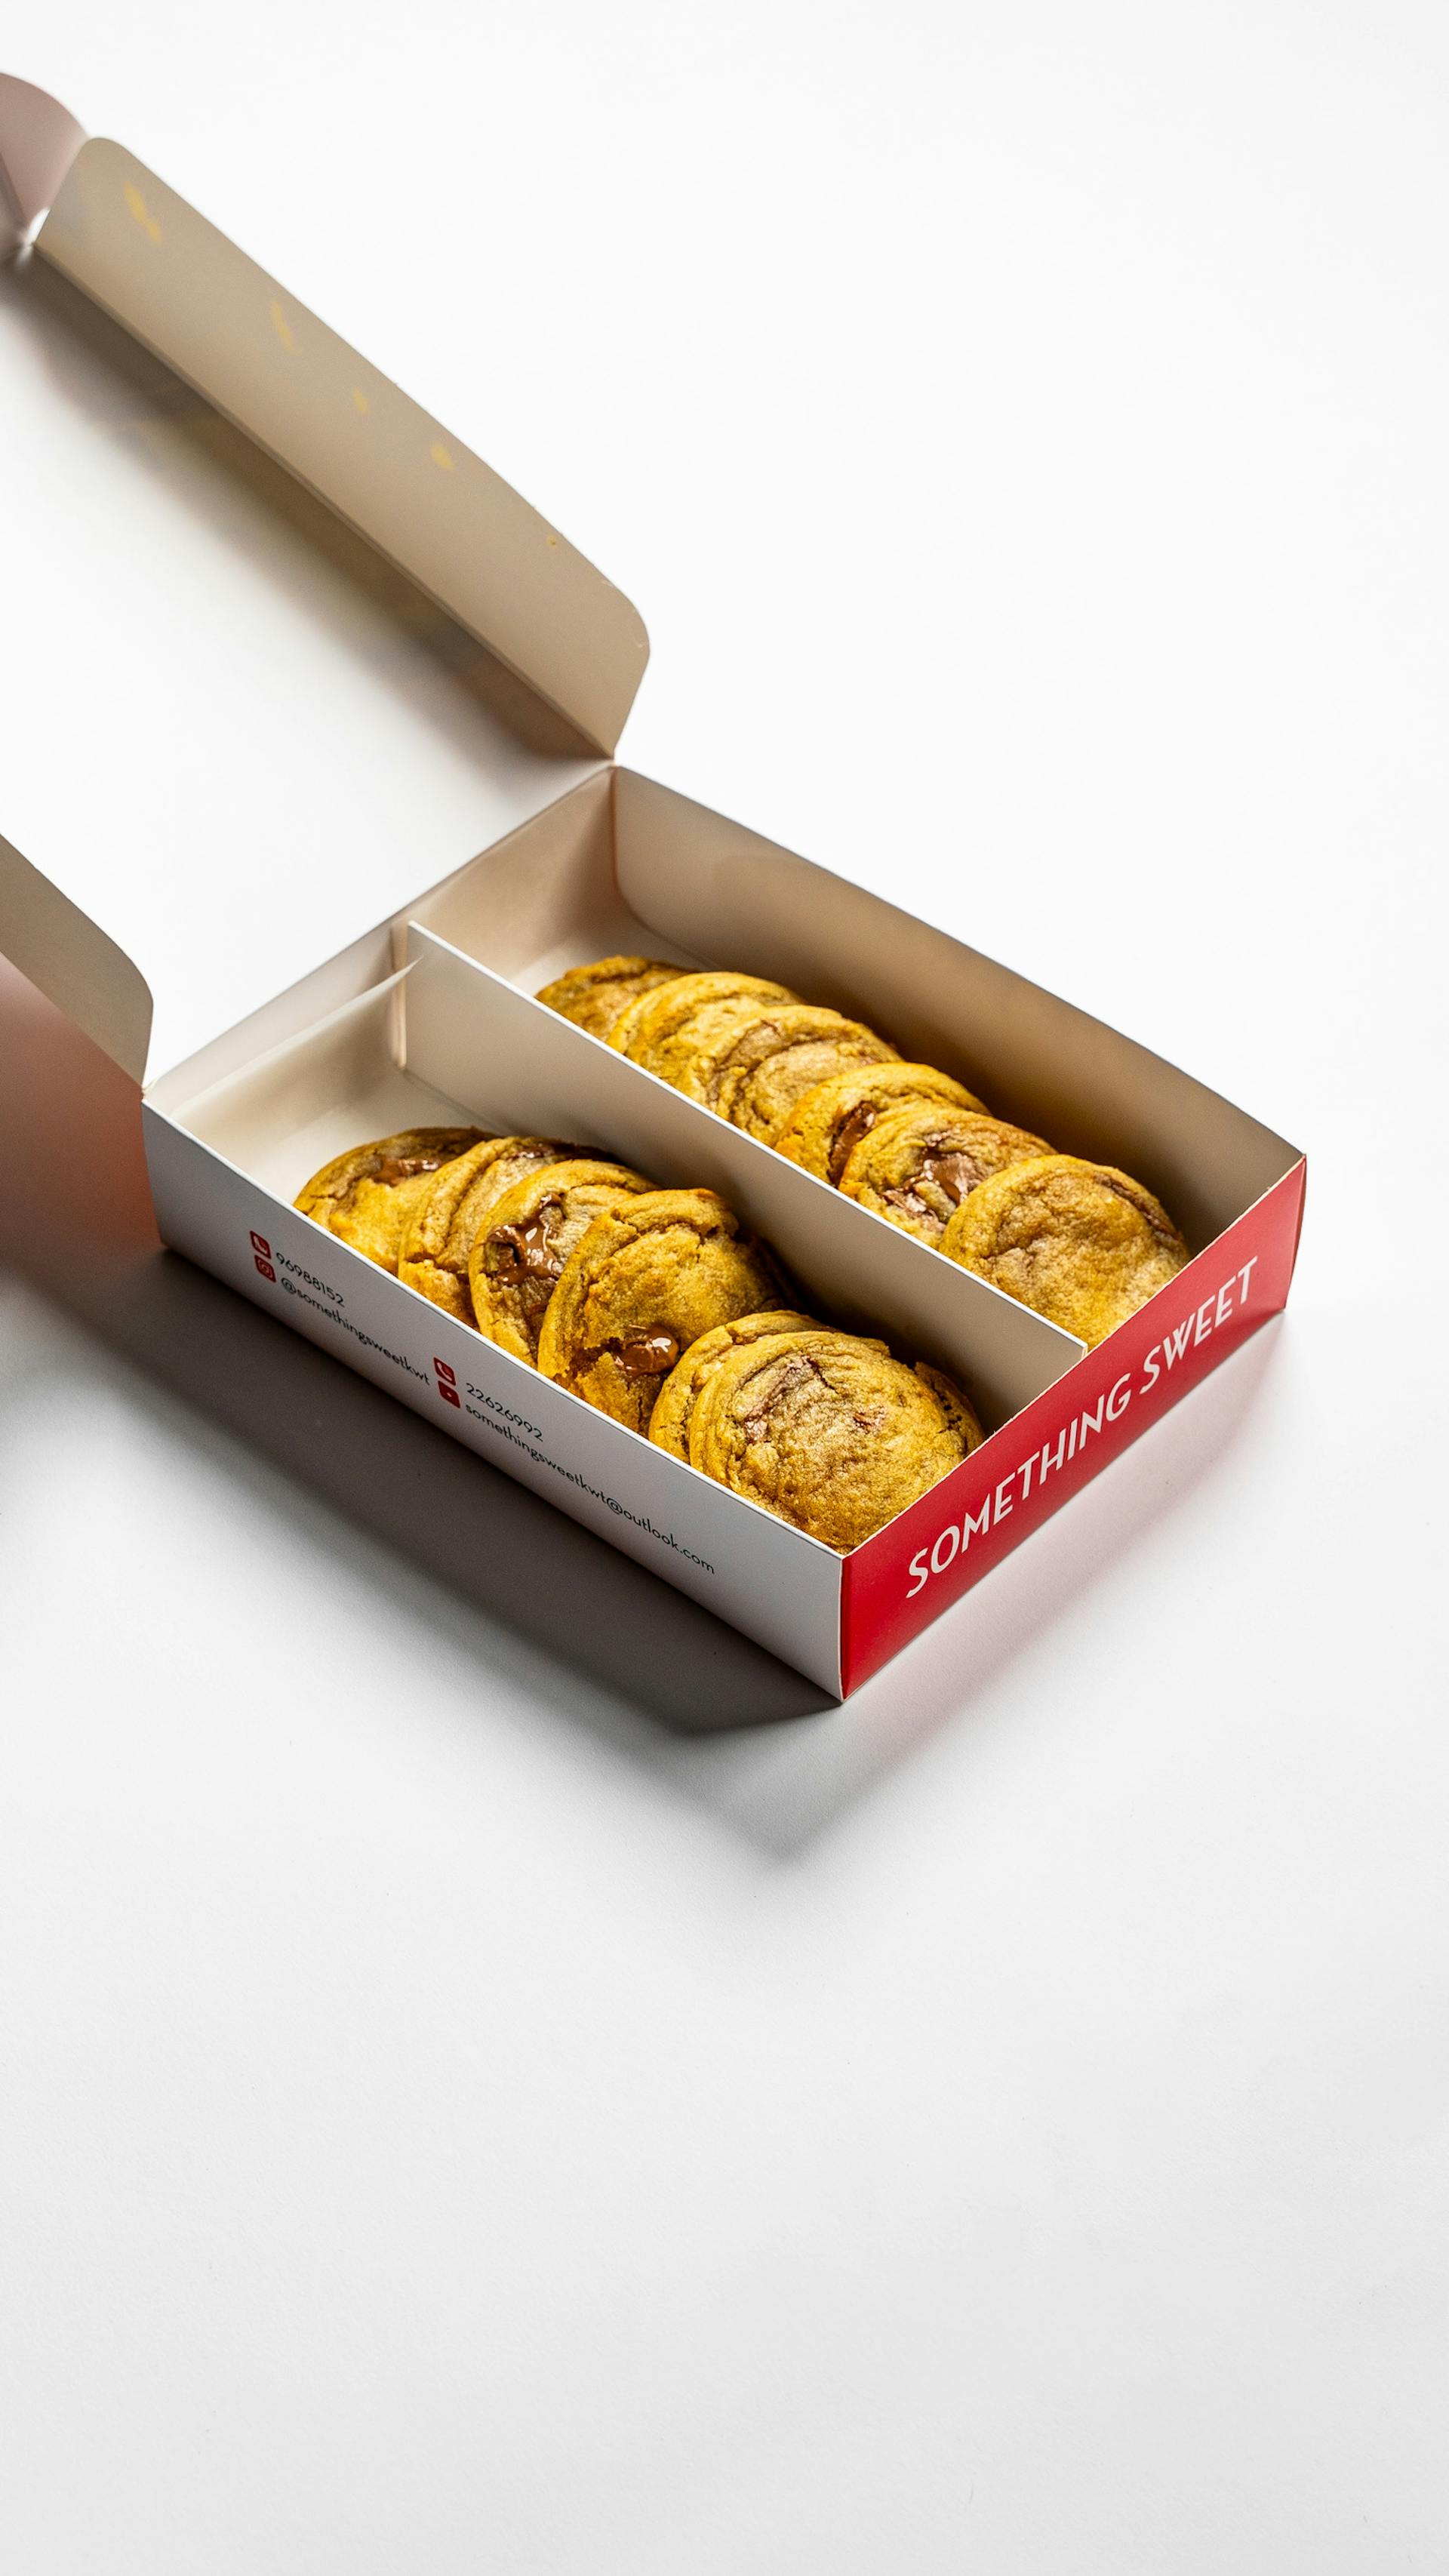 A box of cookies | Source: Pexels